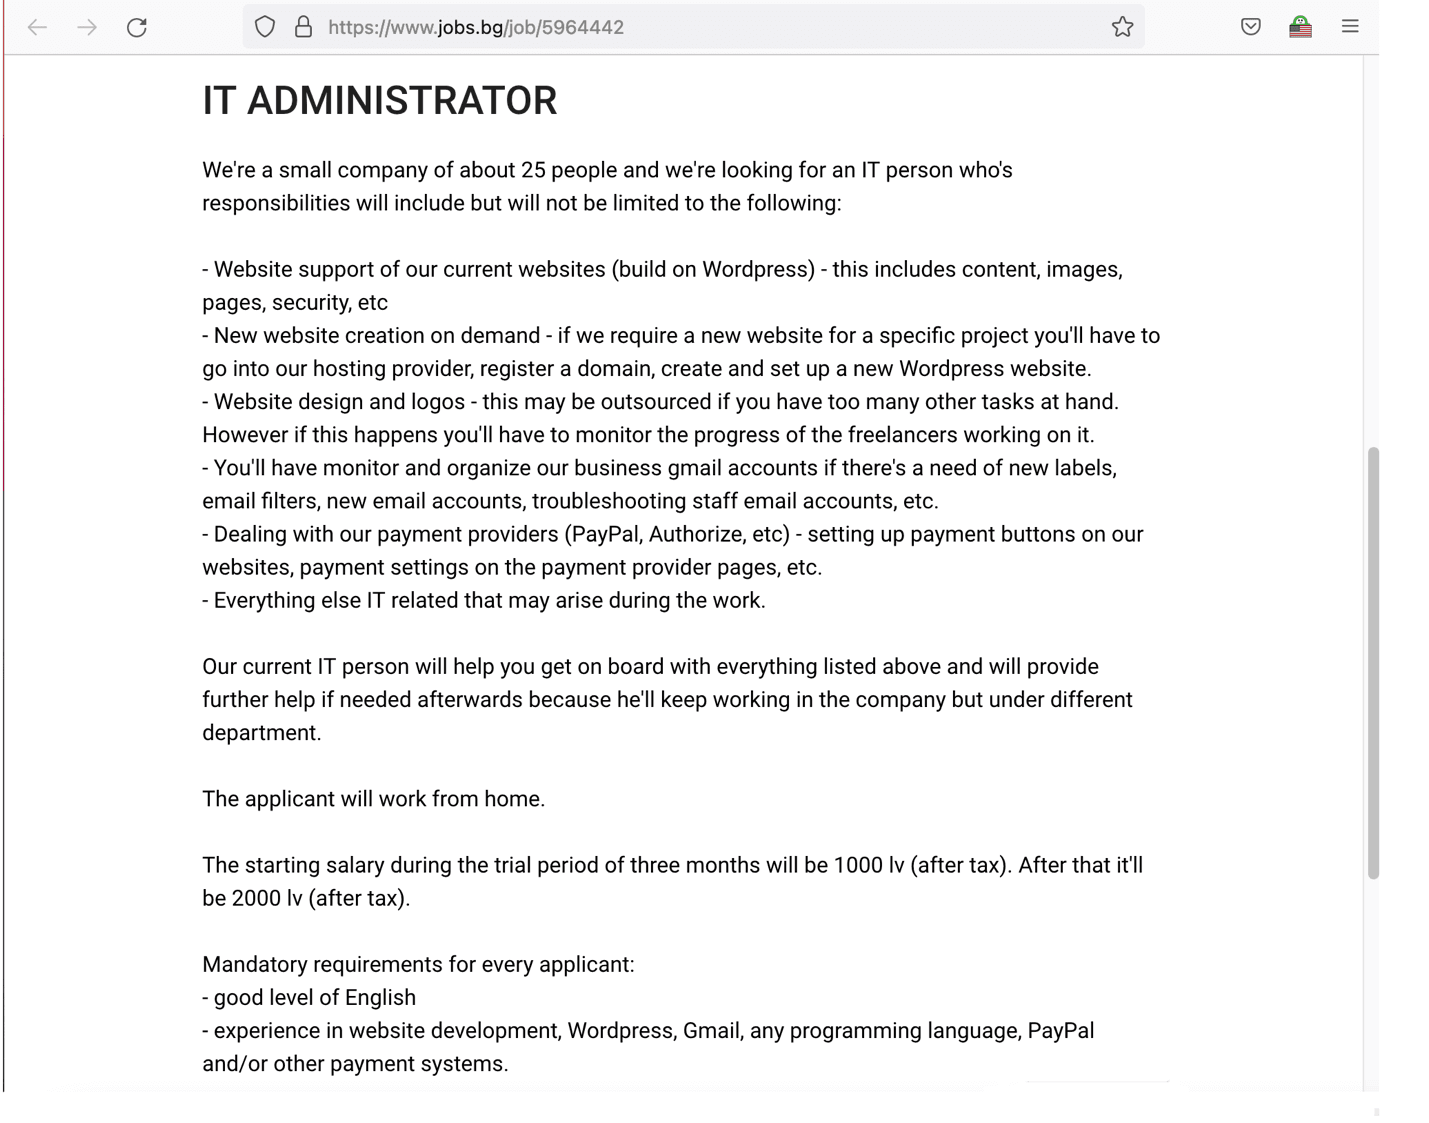 Application consulting IT administrator job description